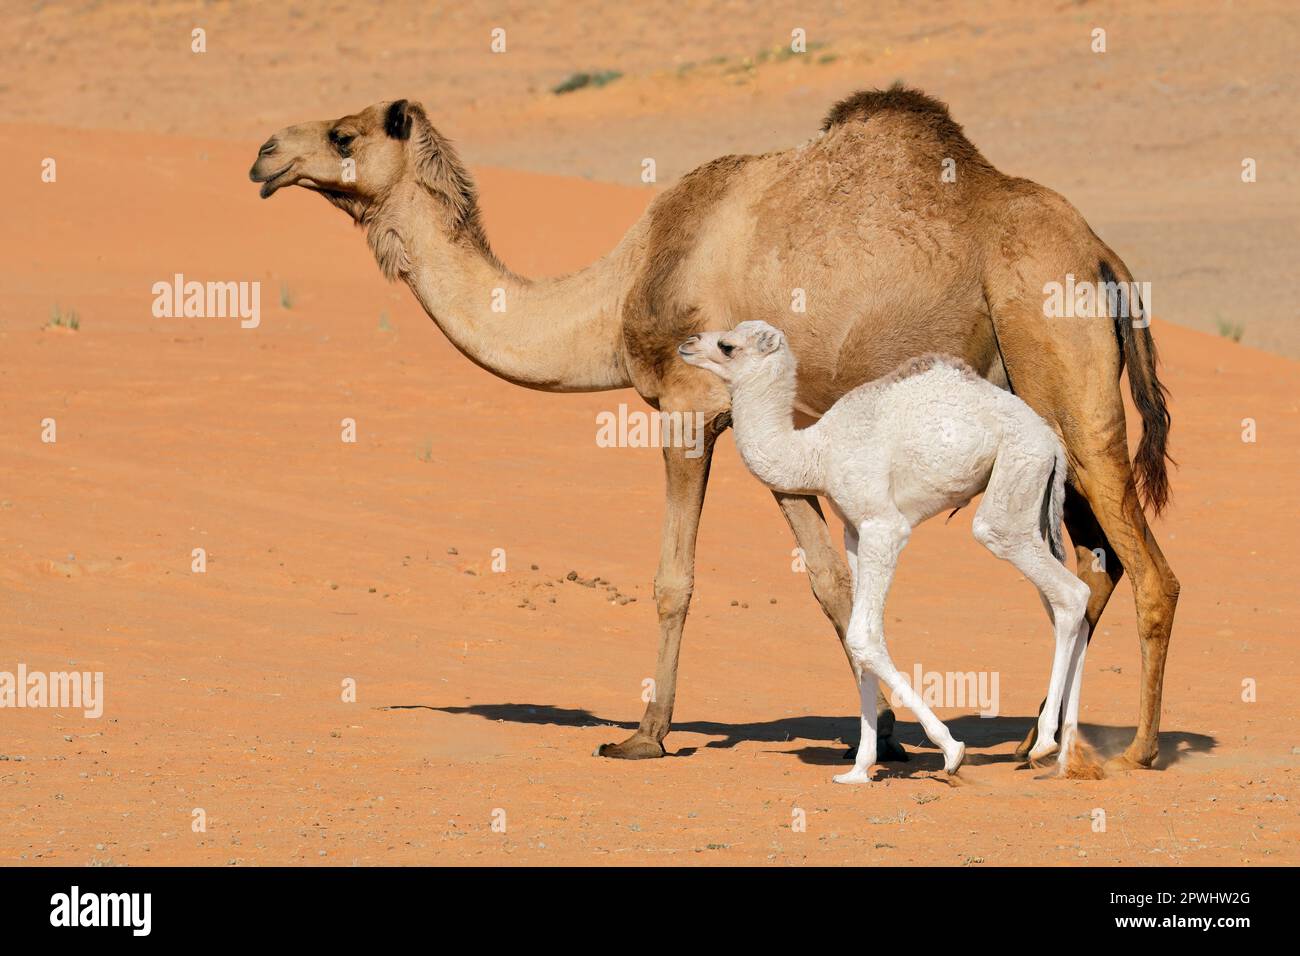 A camel with a young calve on a desert sand dune, Arabian Peninsula Stock Photo